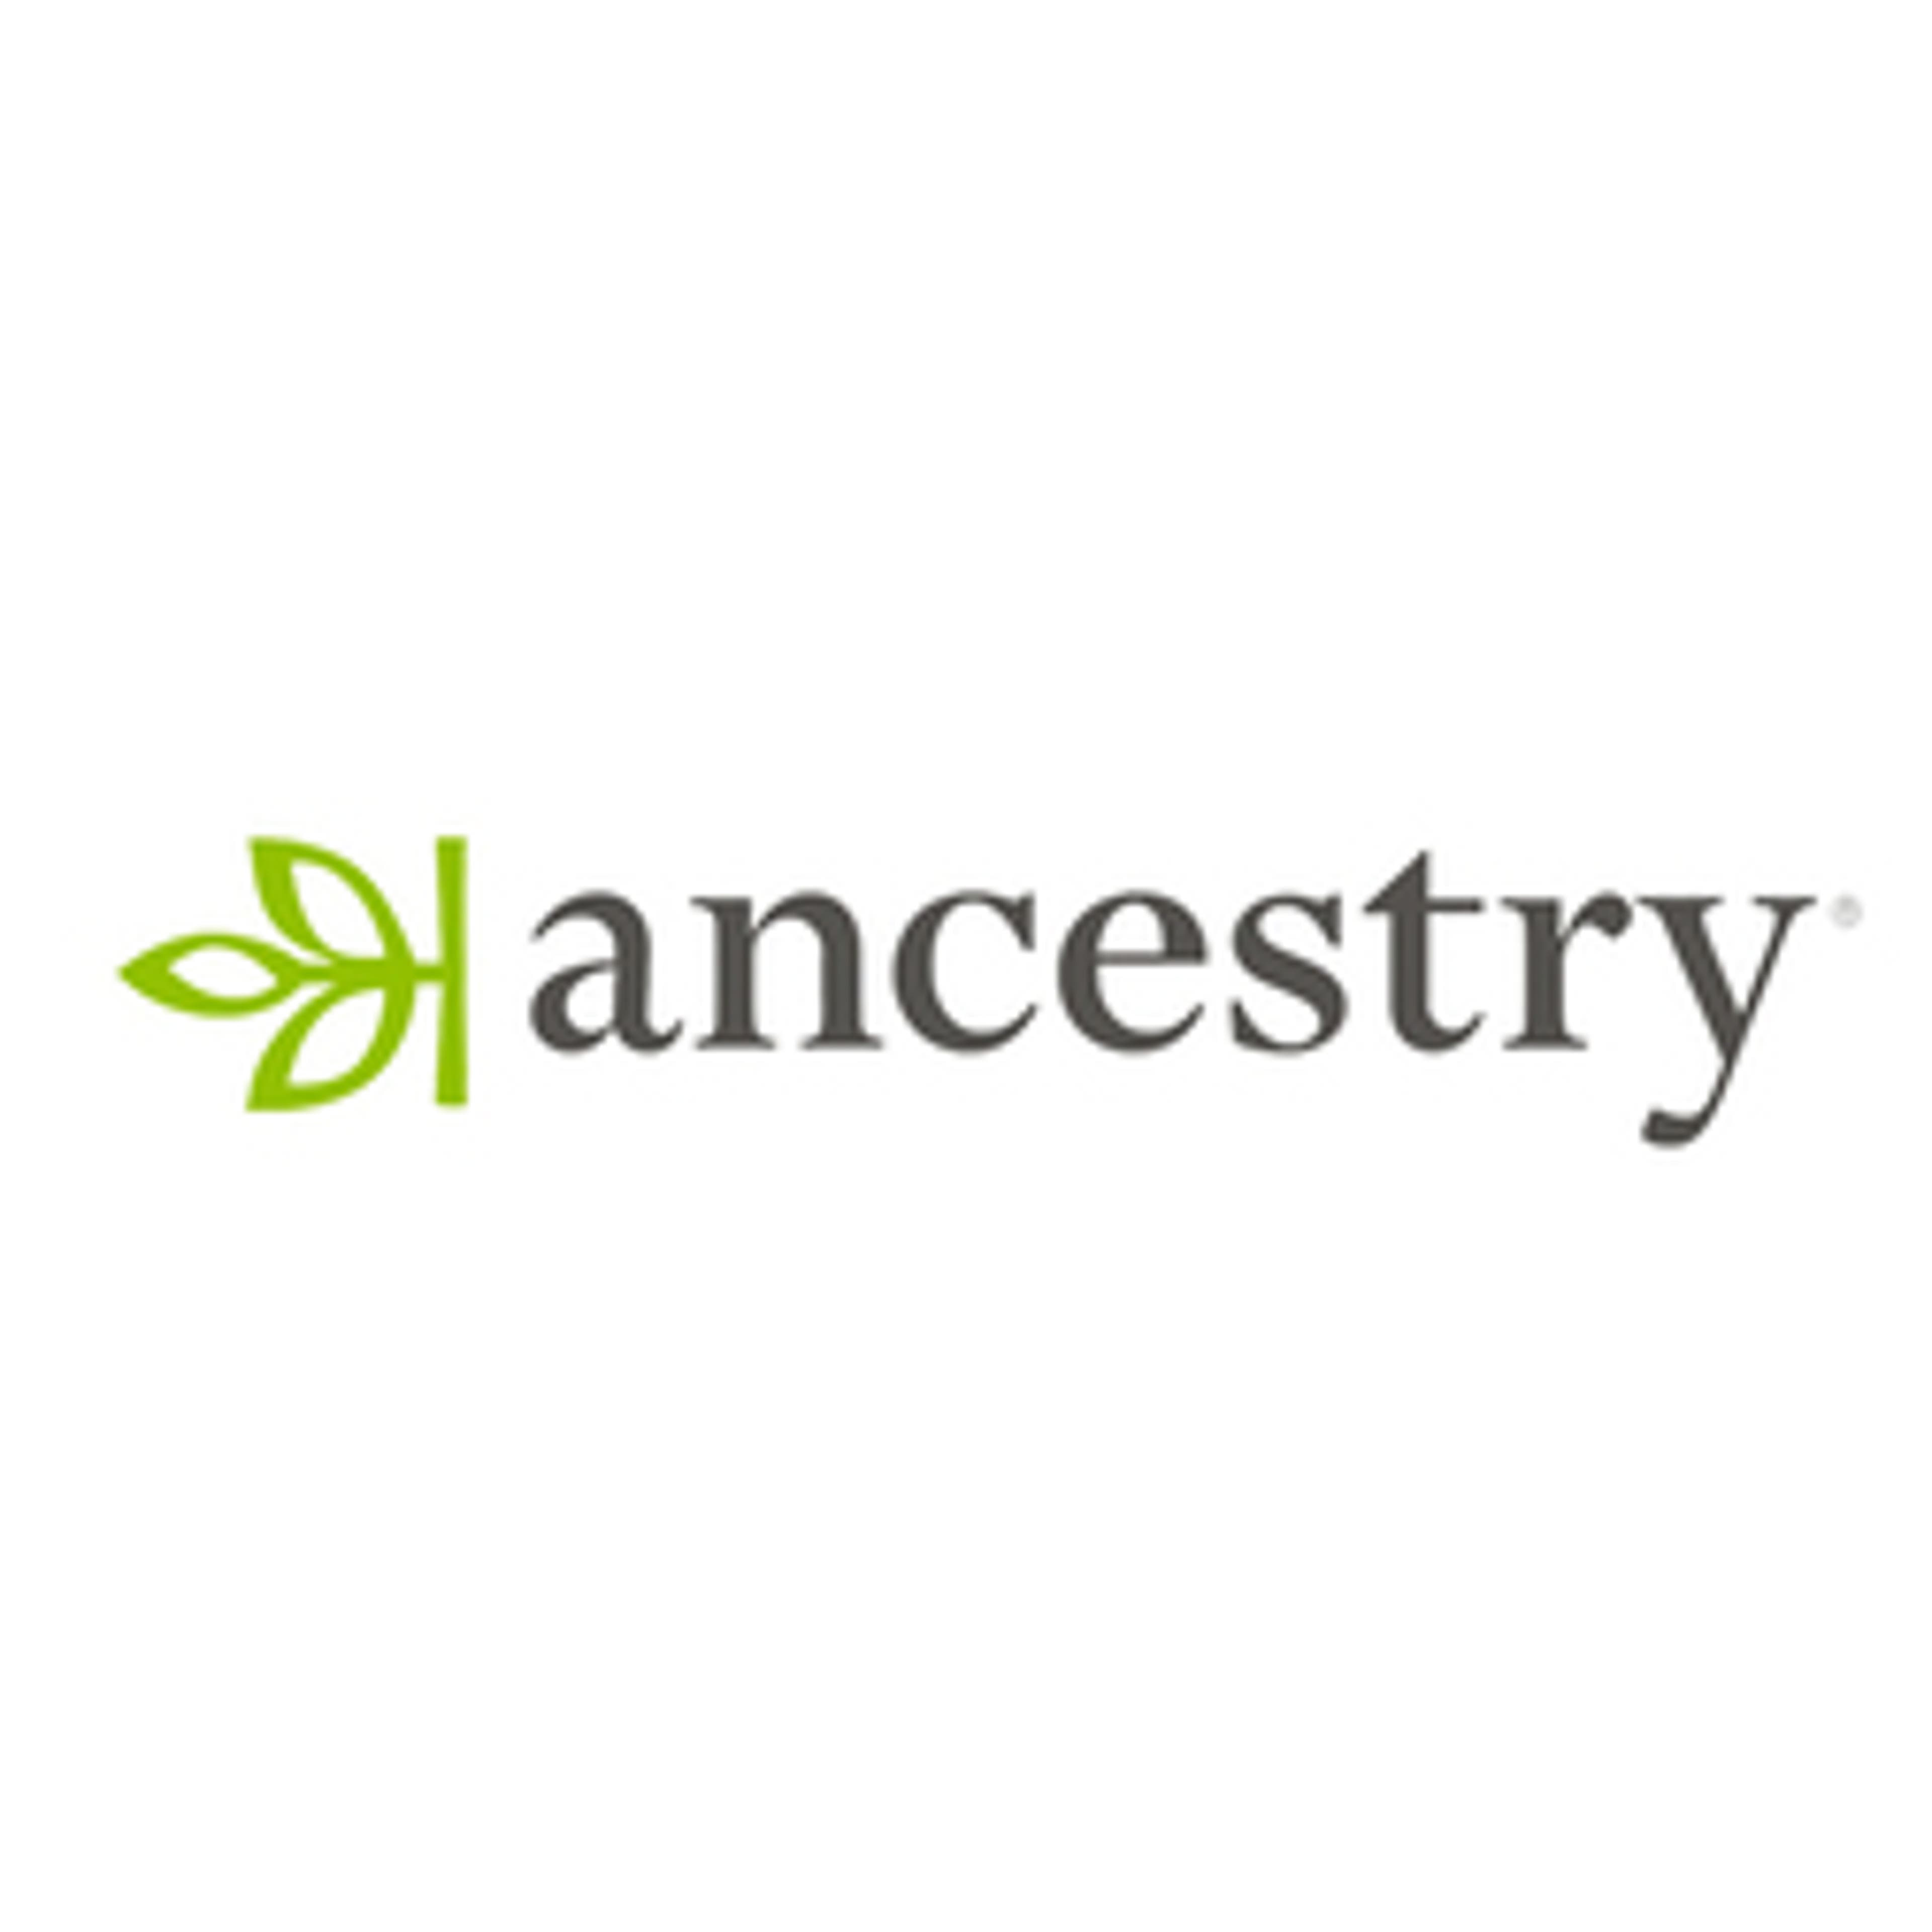  Ancestry 